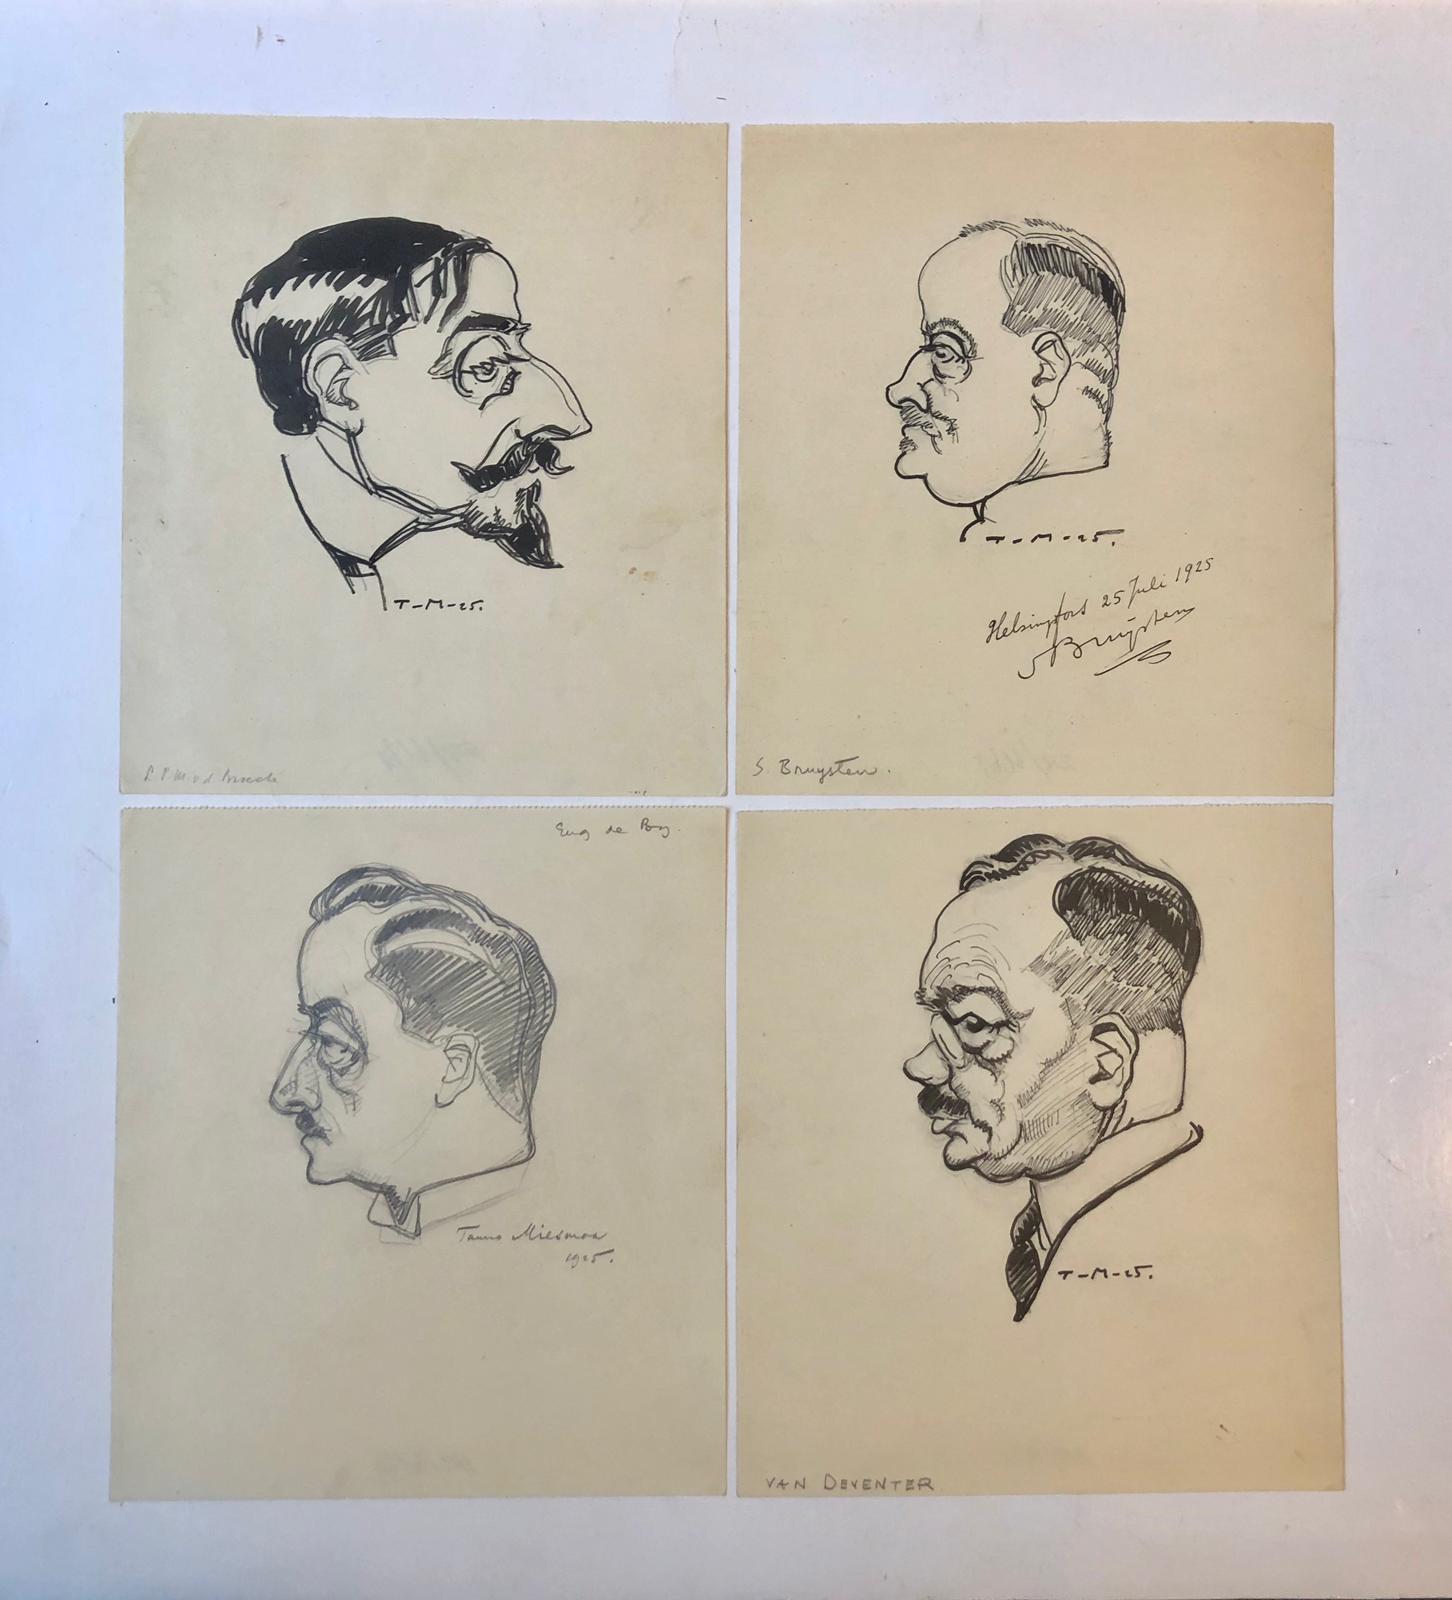  - [Drawings, caricature MIESMAA, KARIKATUREN] Portretkarikaturen in inkt of potlood door Tanno Miesmaa, 1925, ieder ca. 15x15 cm.